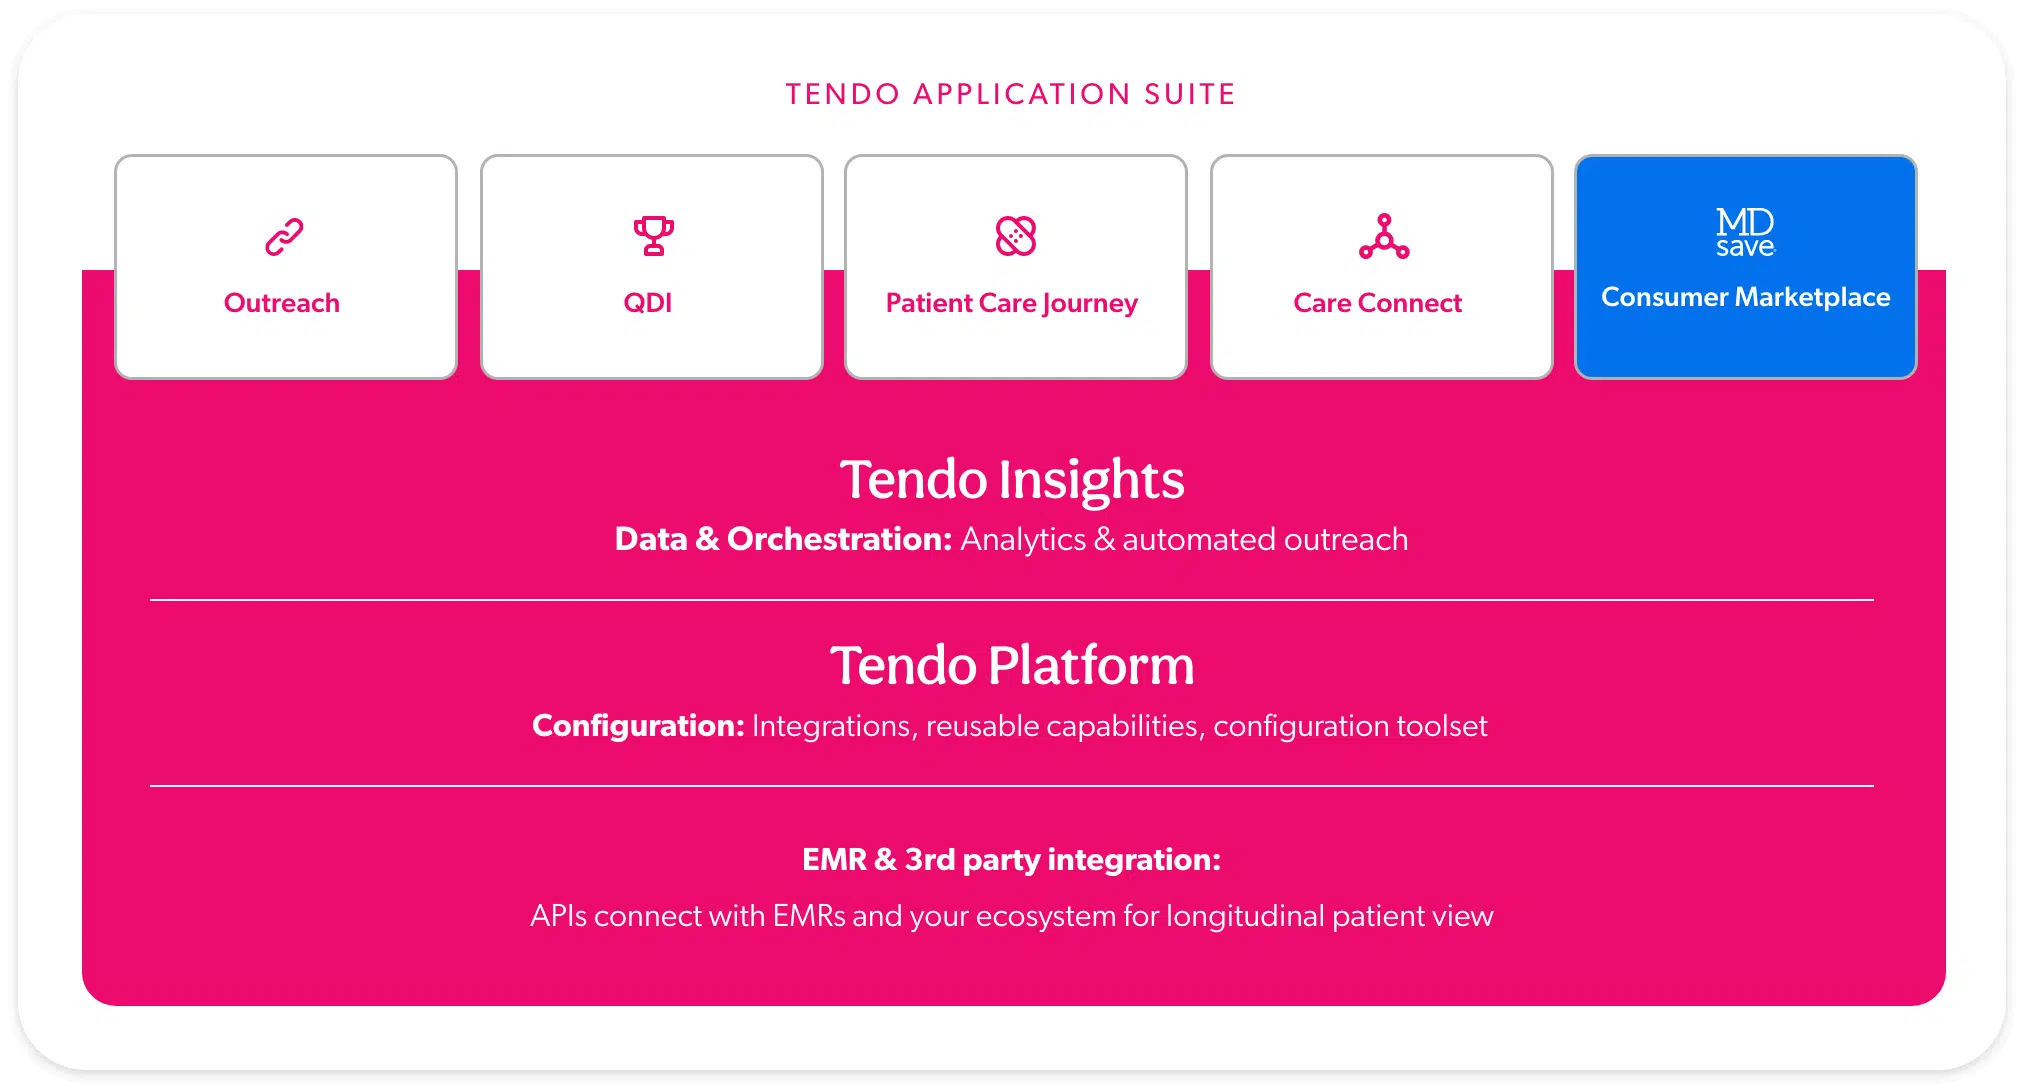 Tendo Apps and Platform